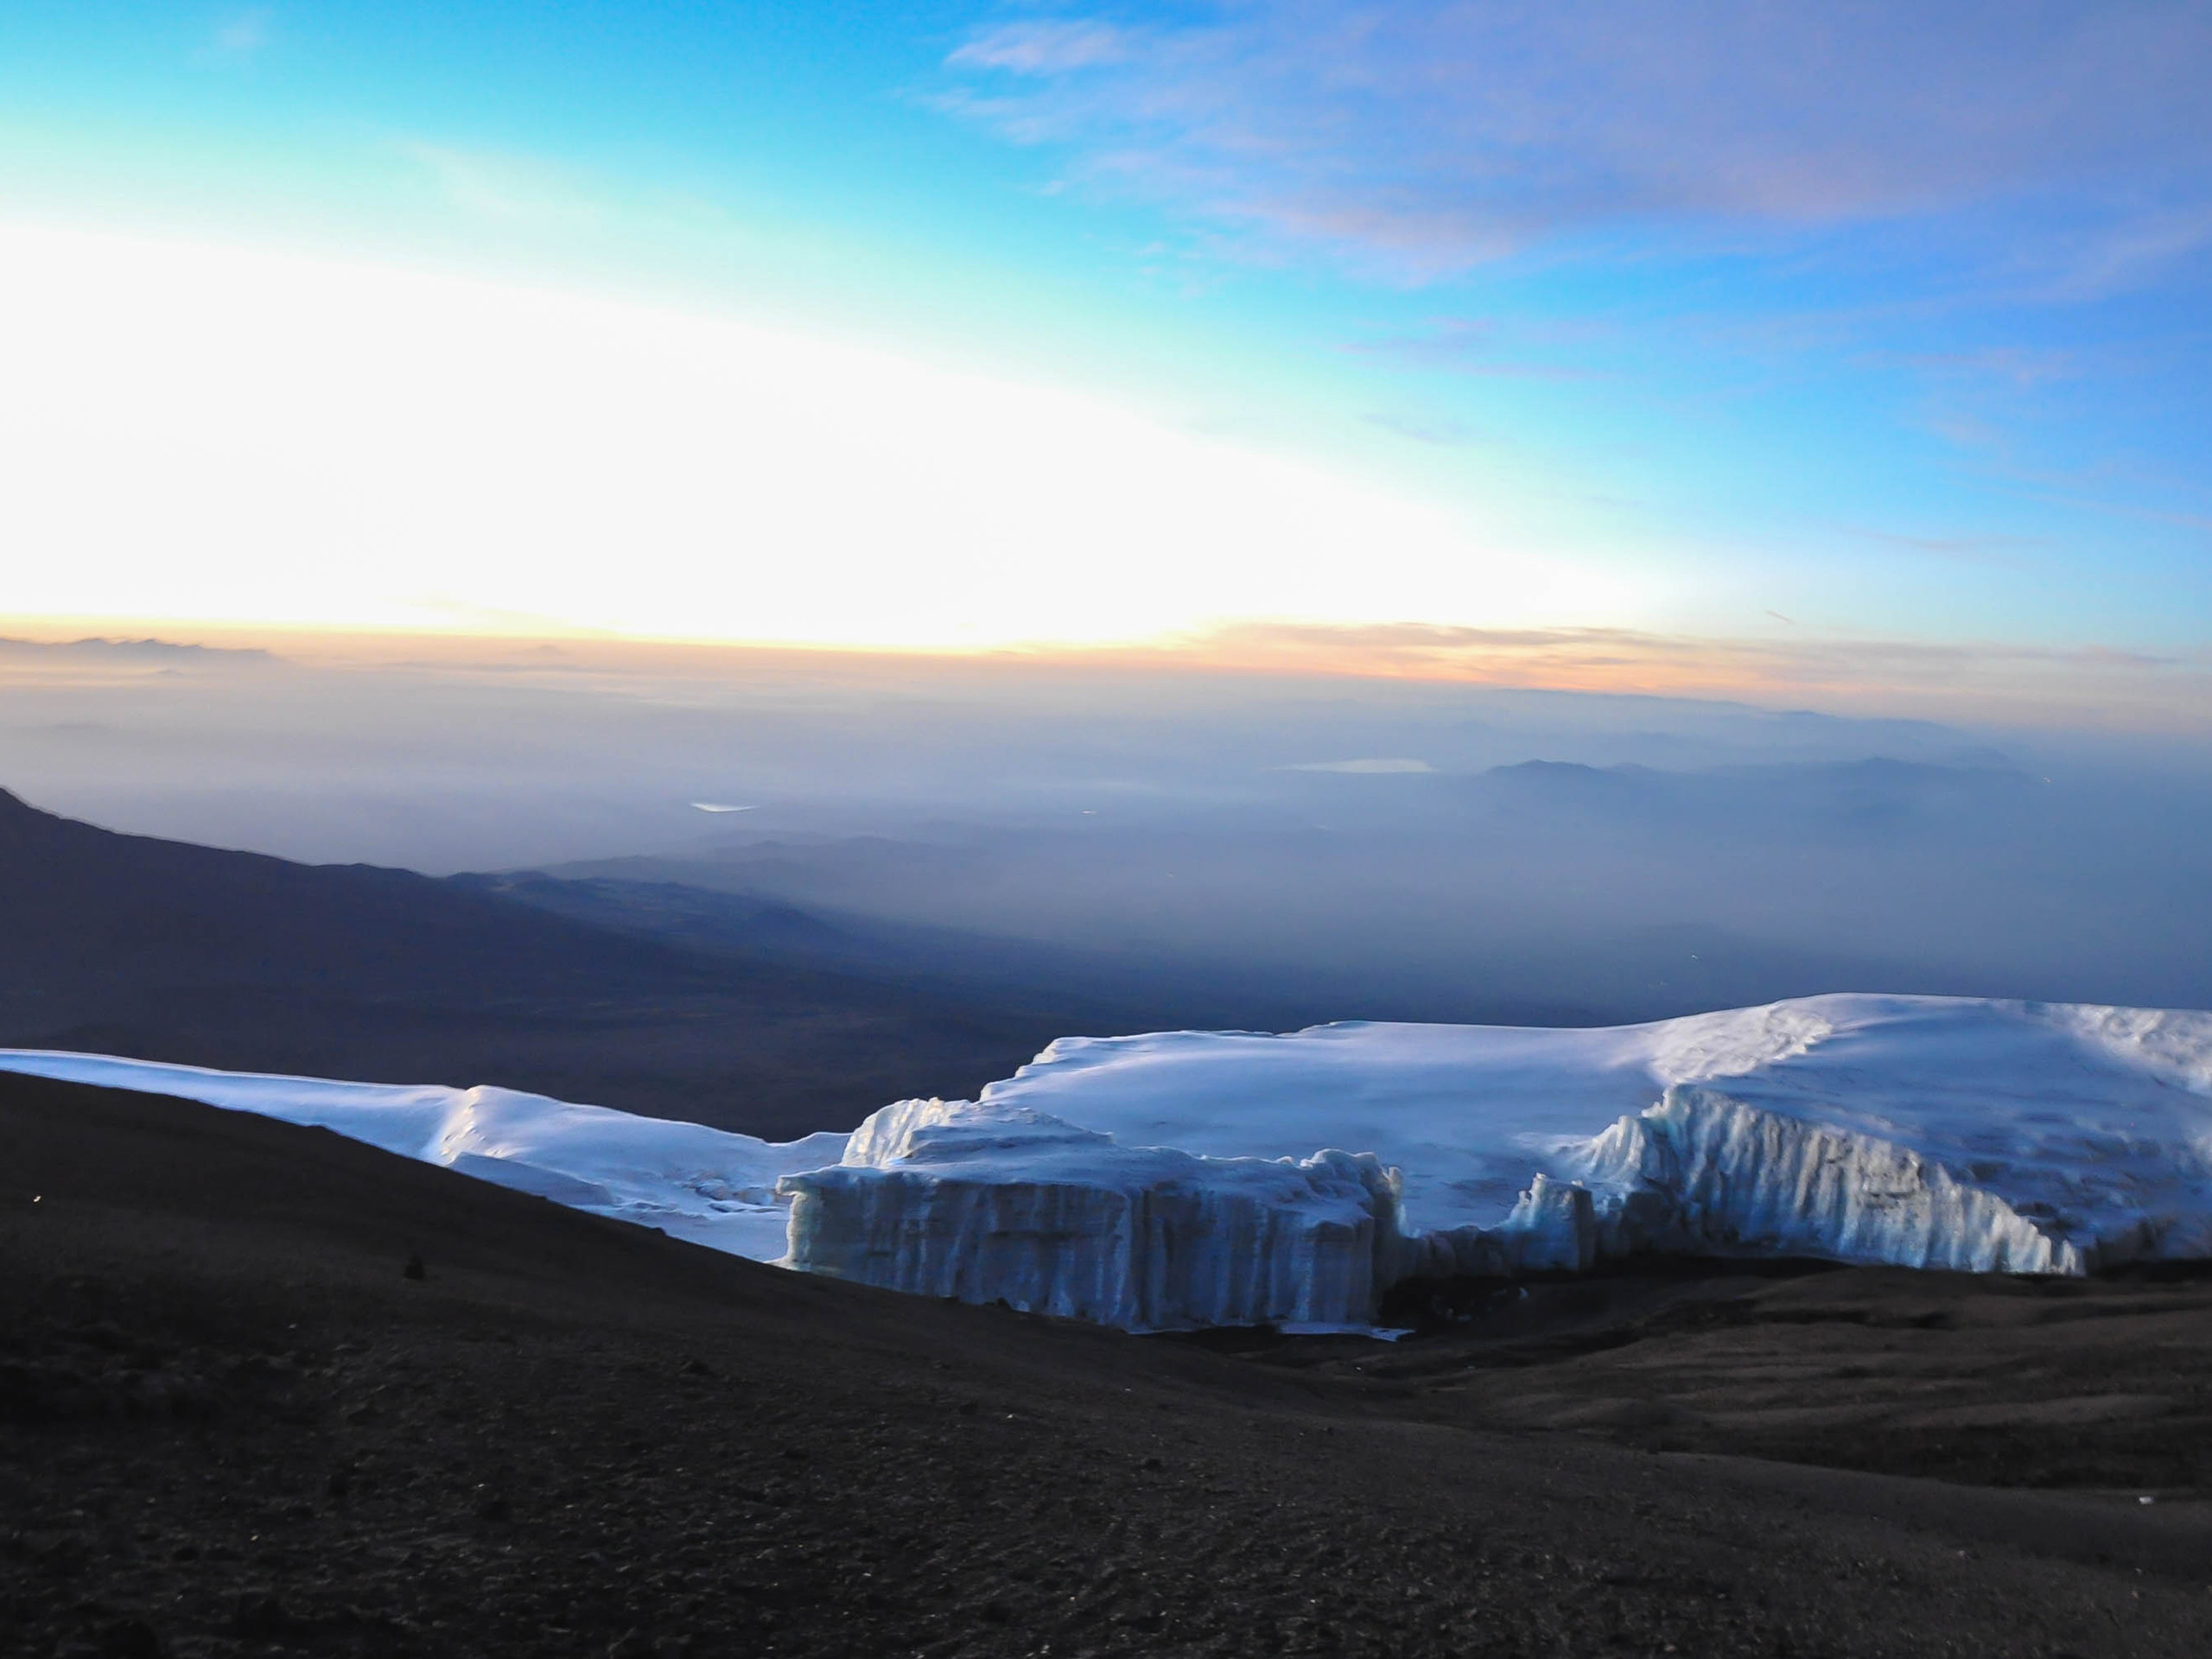 Day 6. Push to the Summit of Kilimanjaro